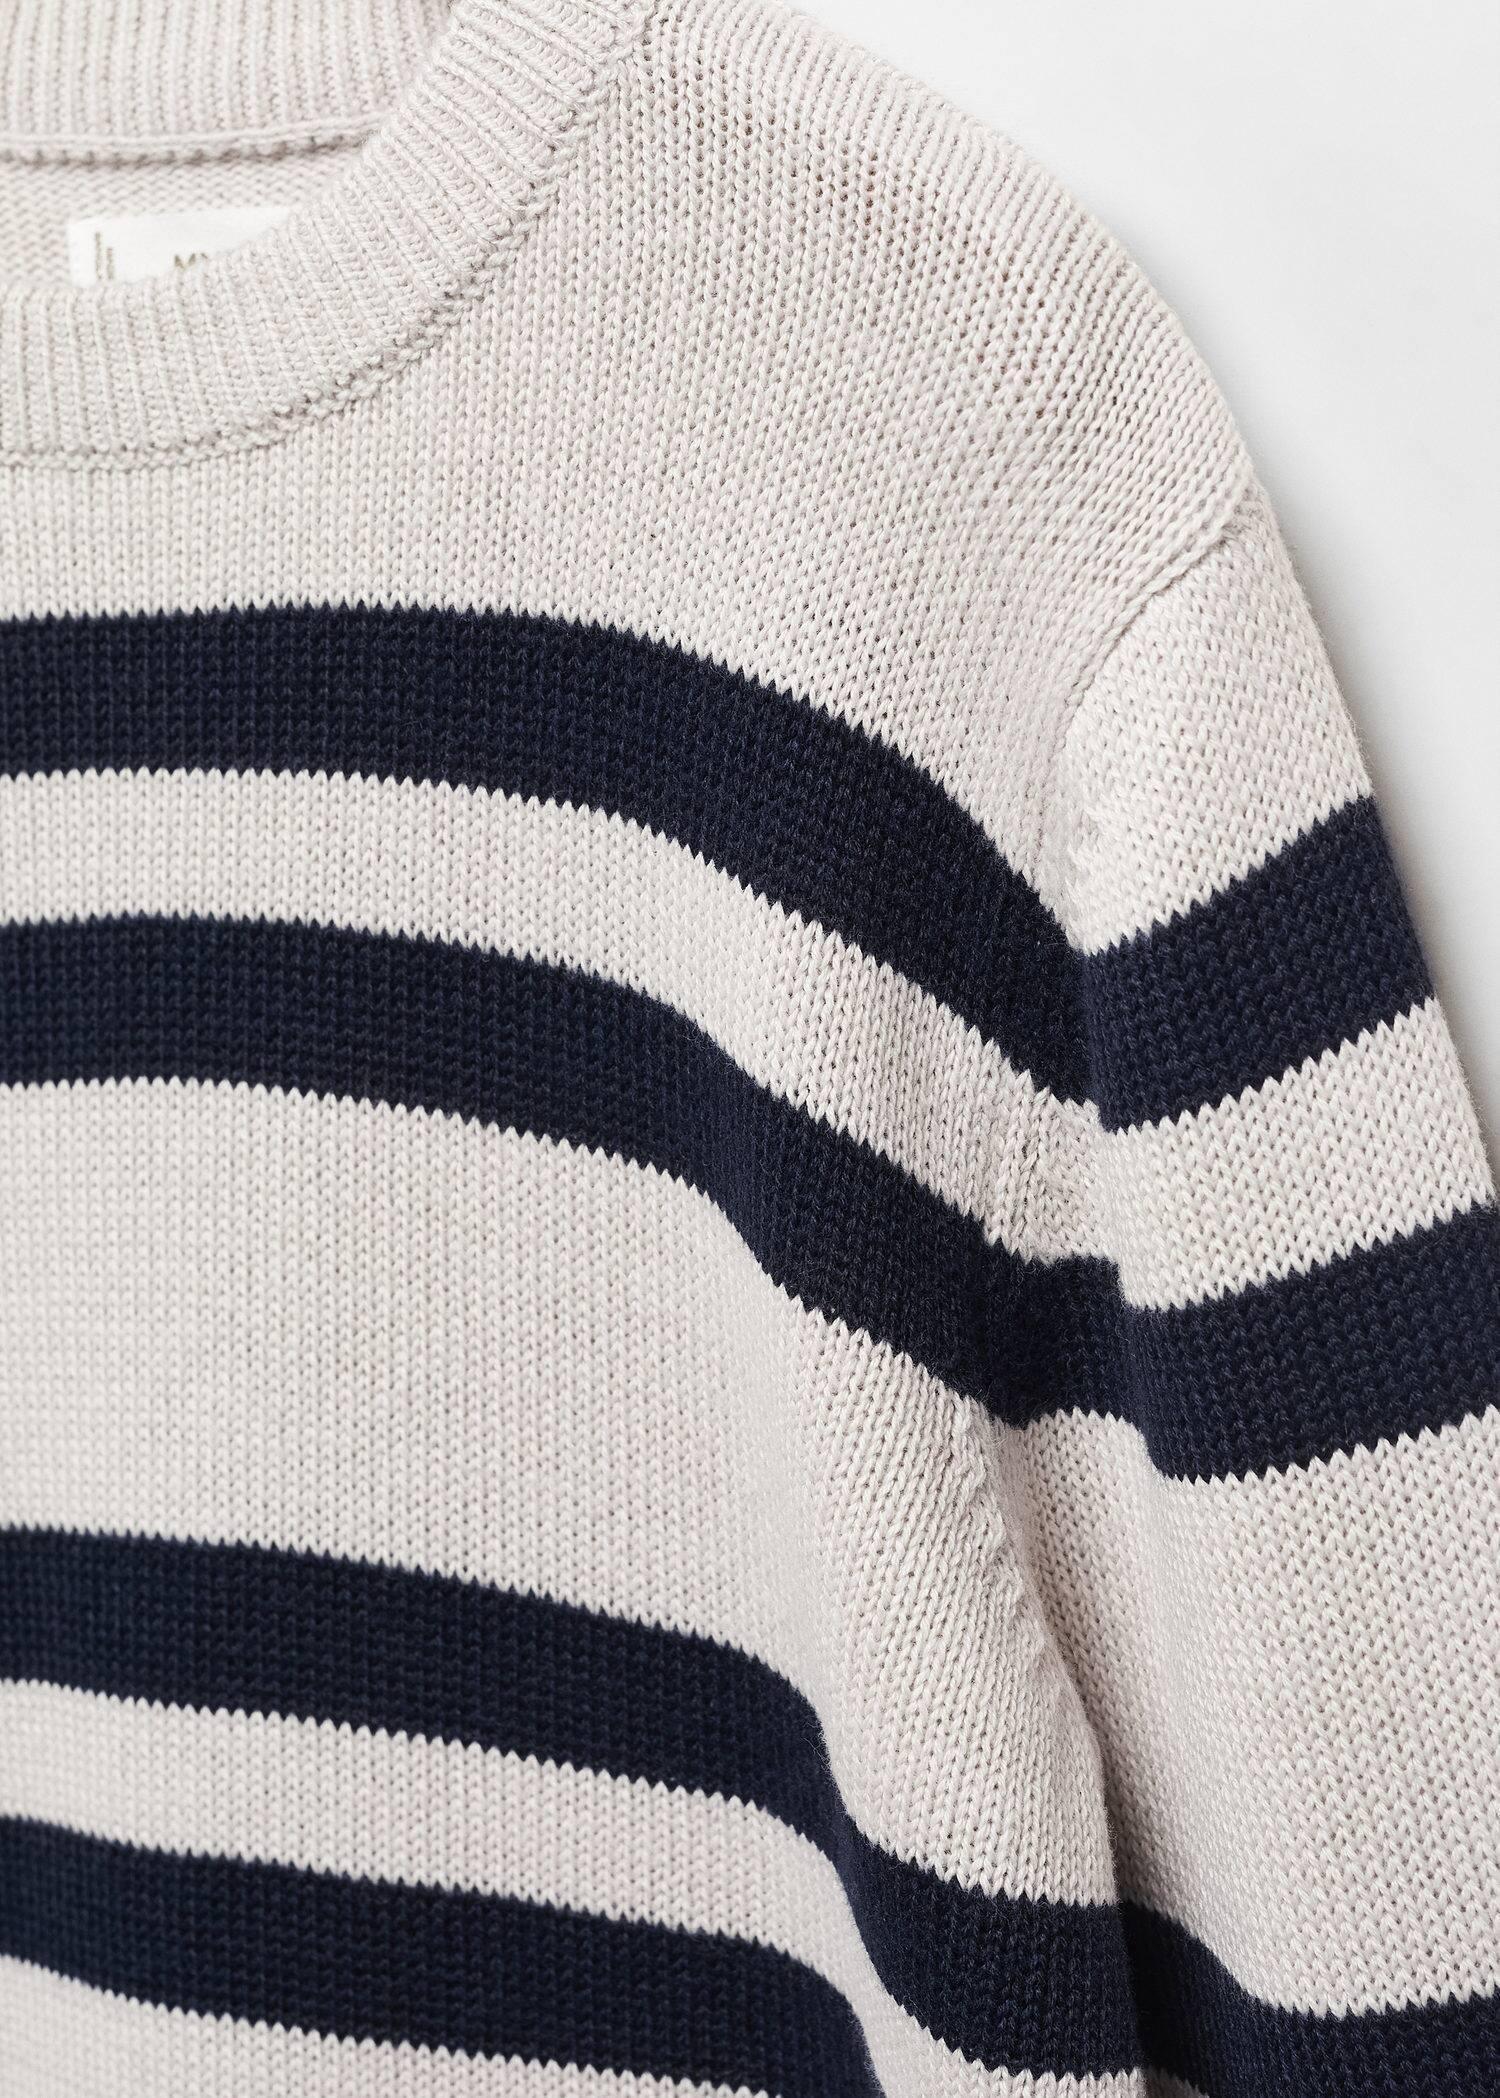 Mango - Grey Lt-Pastel Striped Knit Sweater, Kids Boys